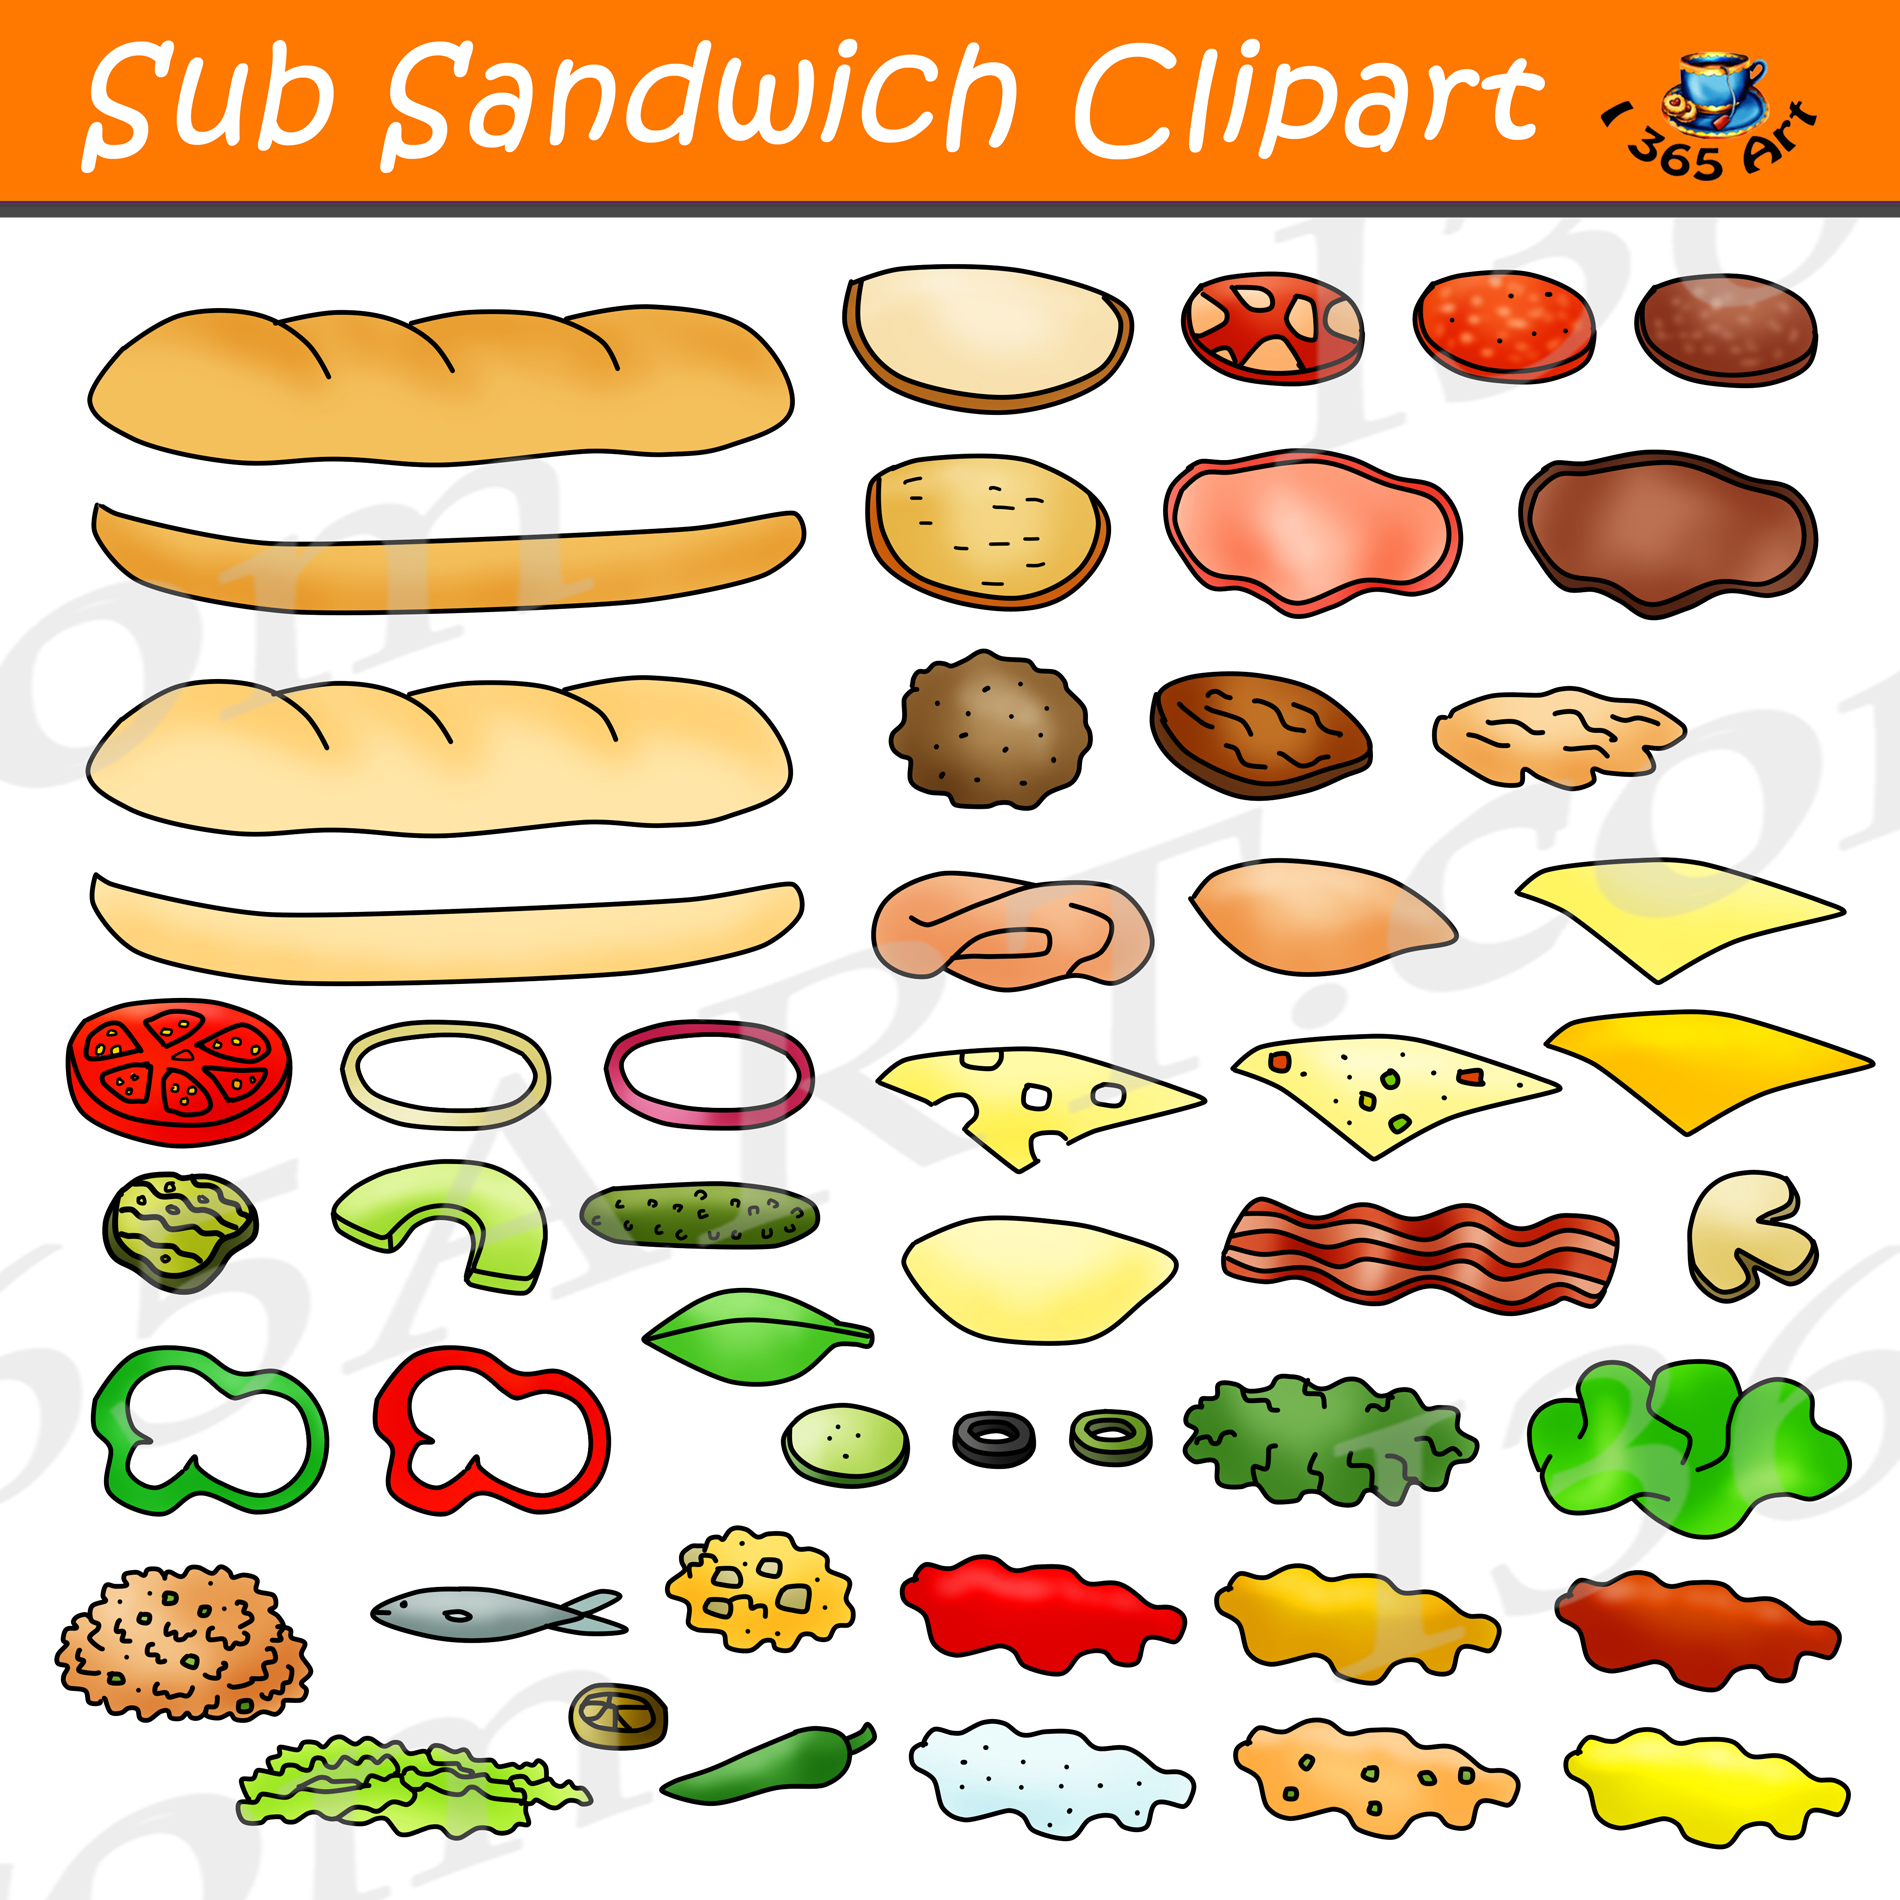 sub sandwich clipart.